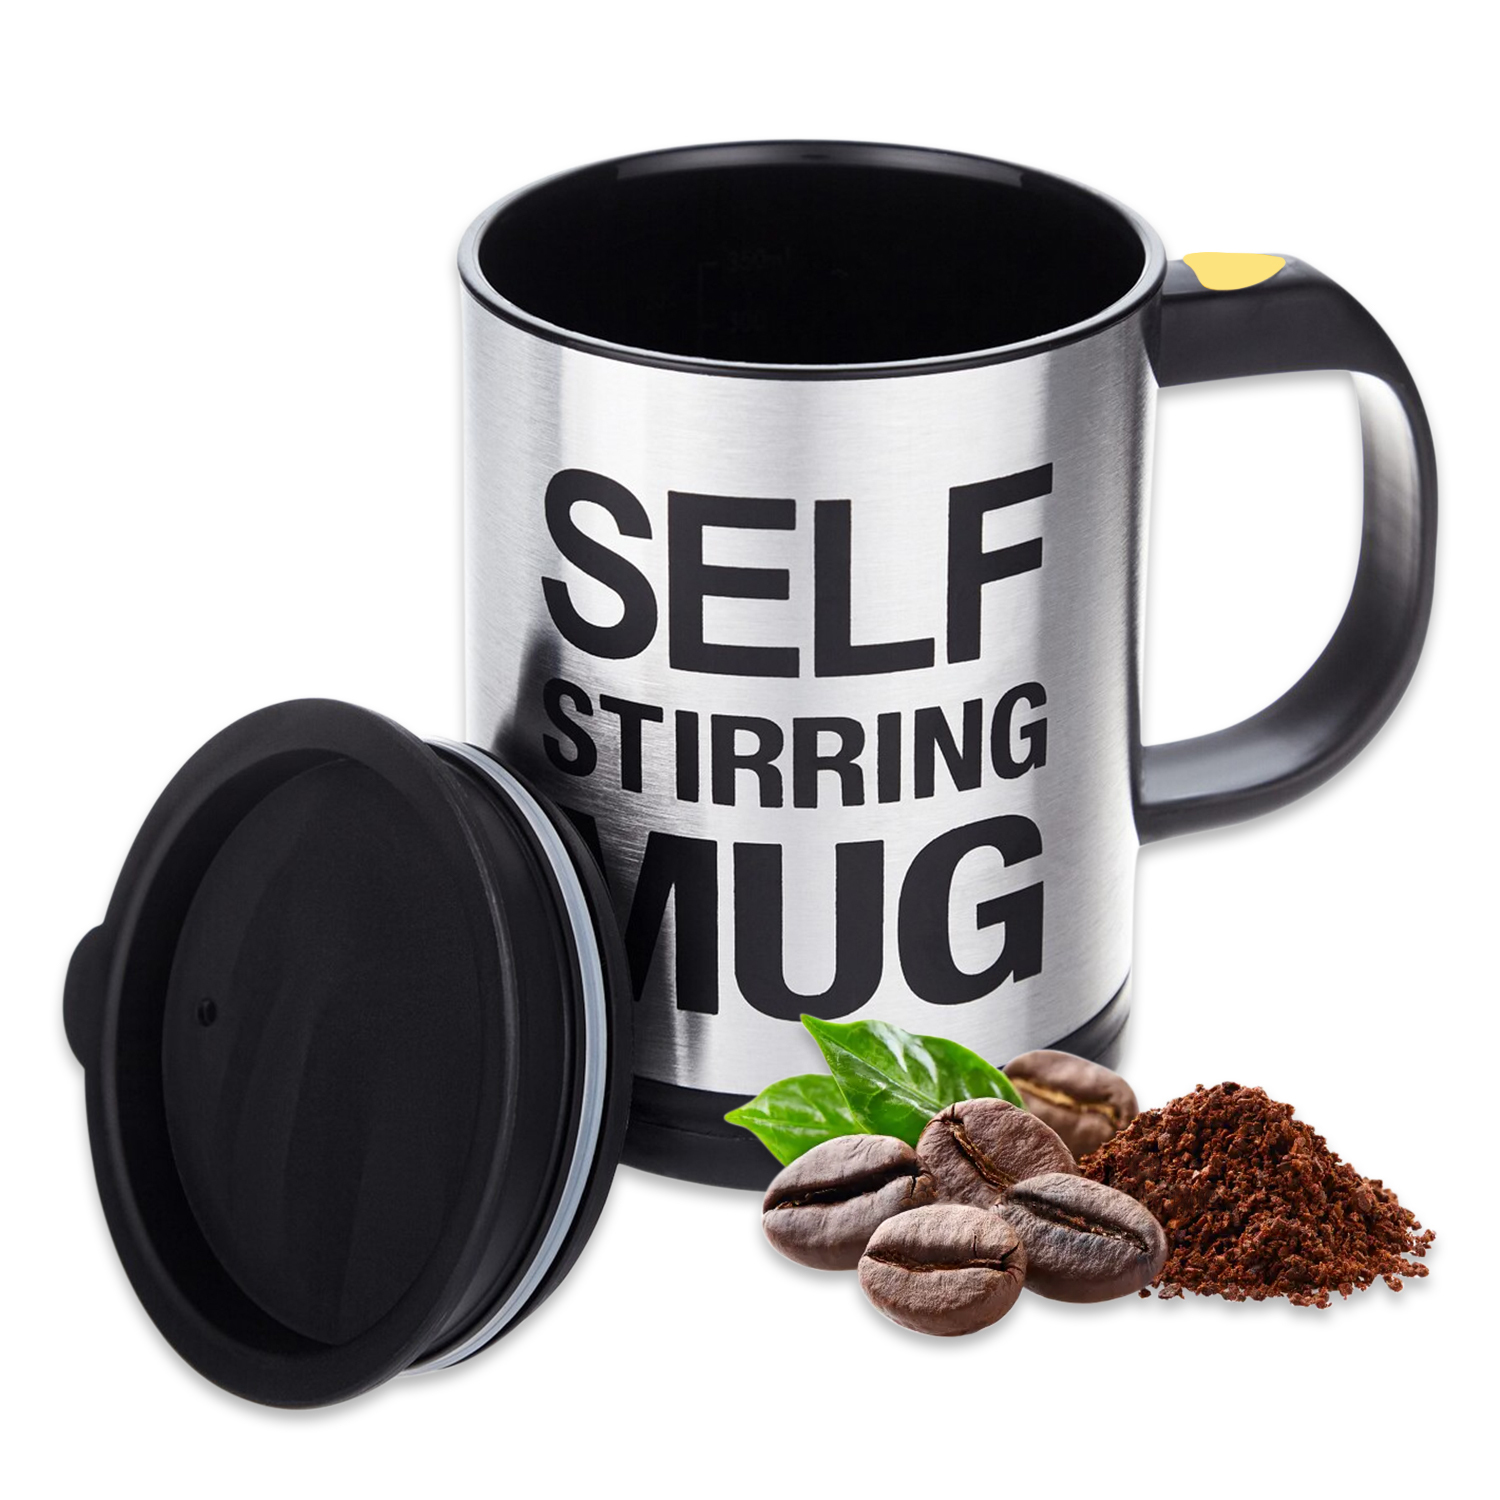 Self stirring coffee mug – Wine and Coffee lover